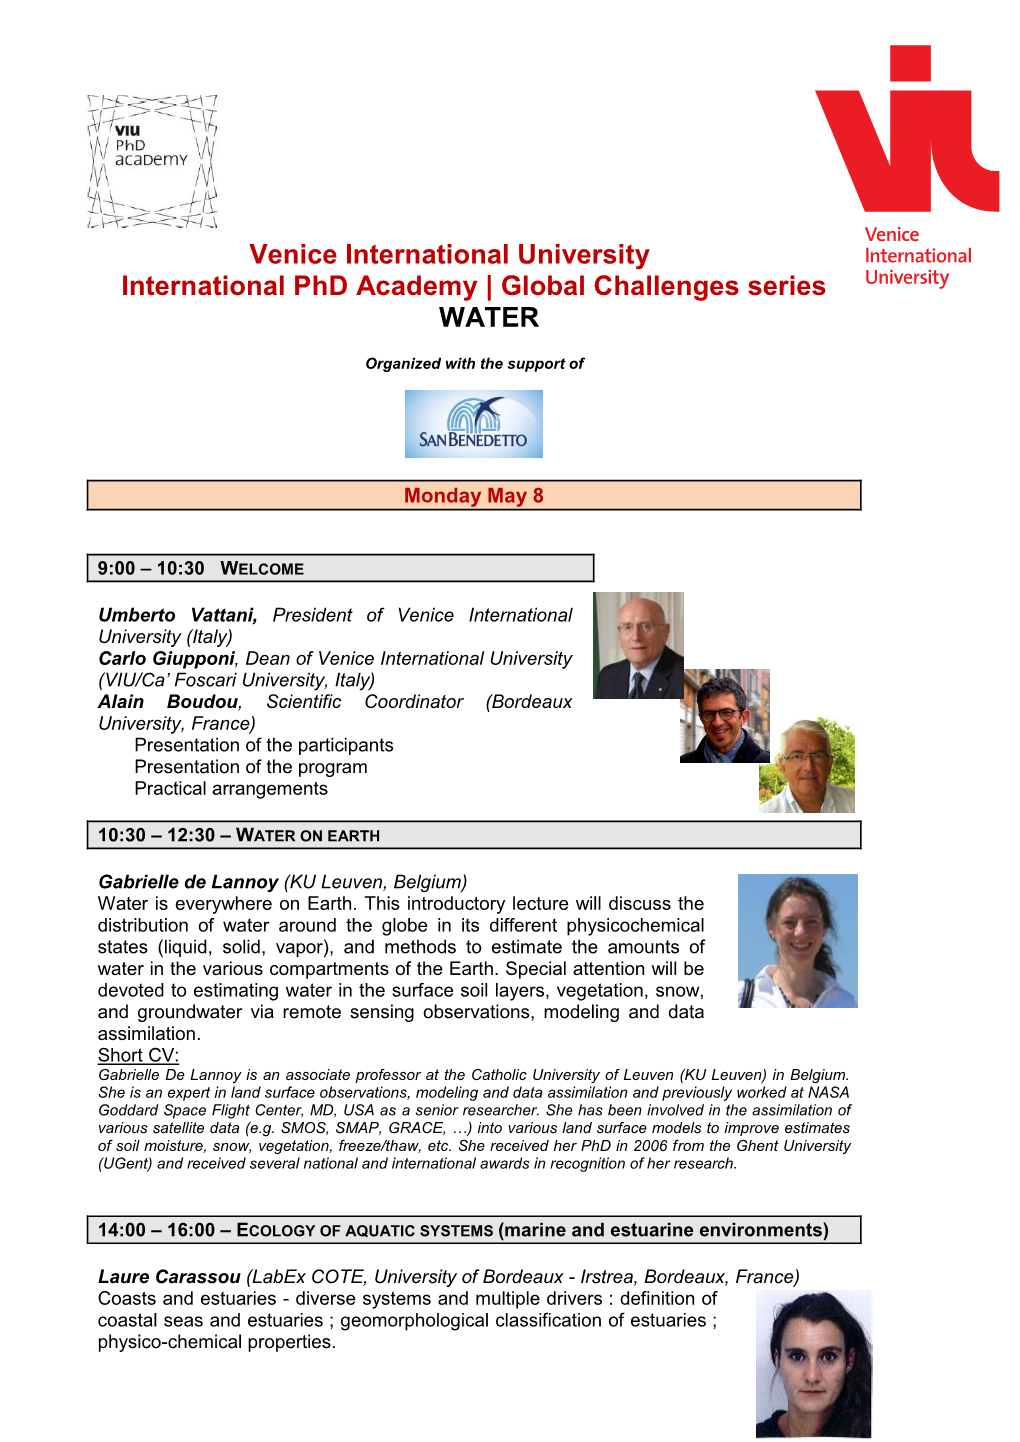 Venice International University International Phd Academy | Global Challenges Series WATER